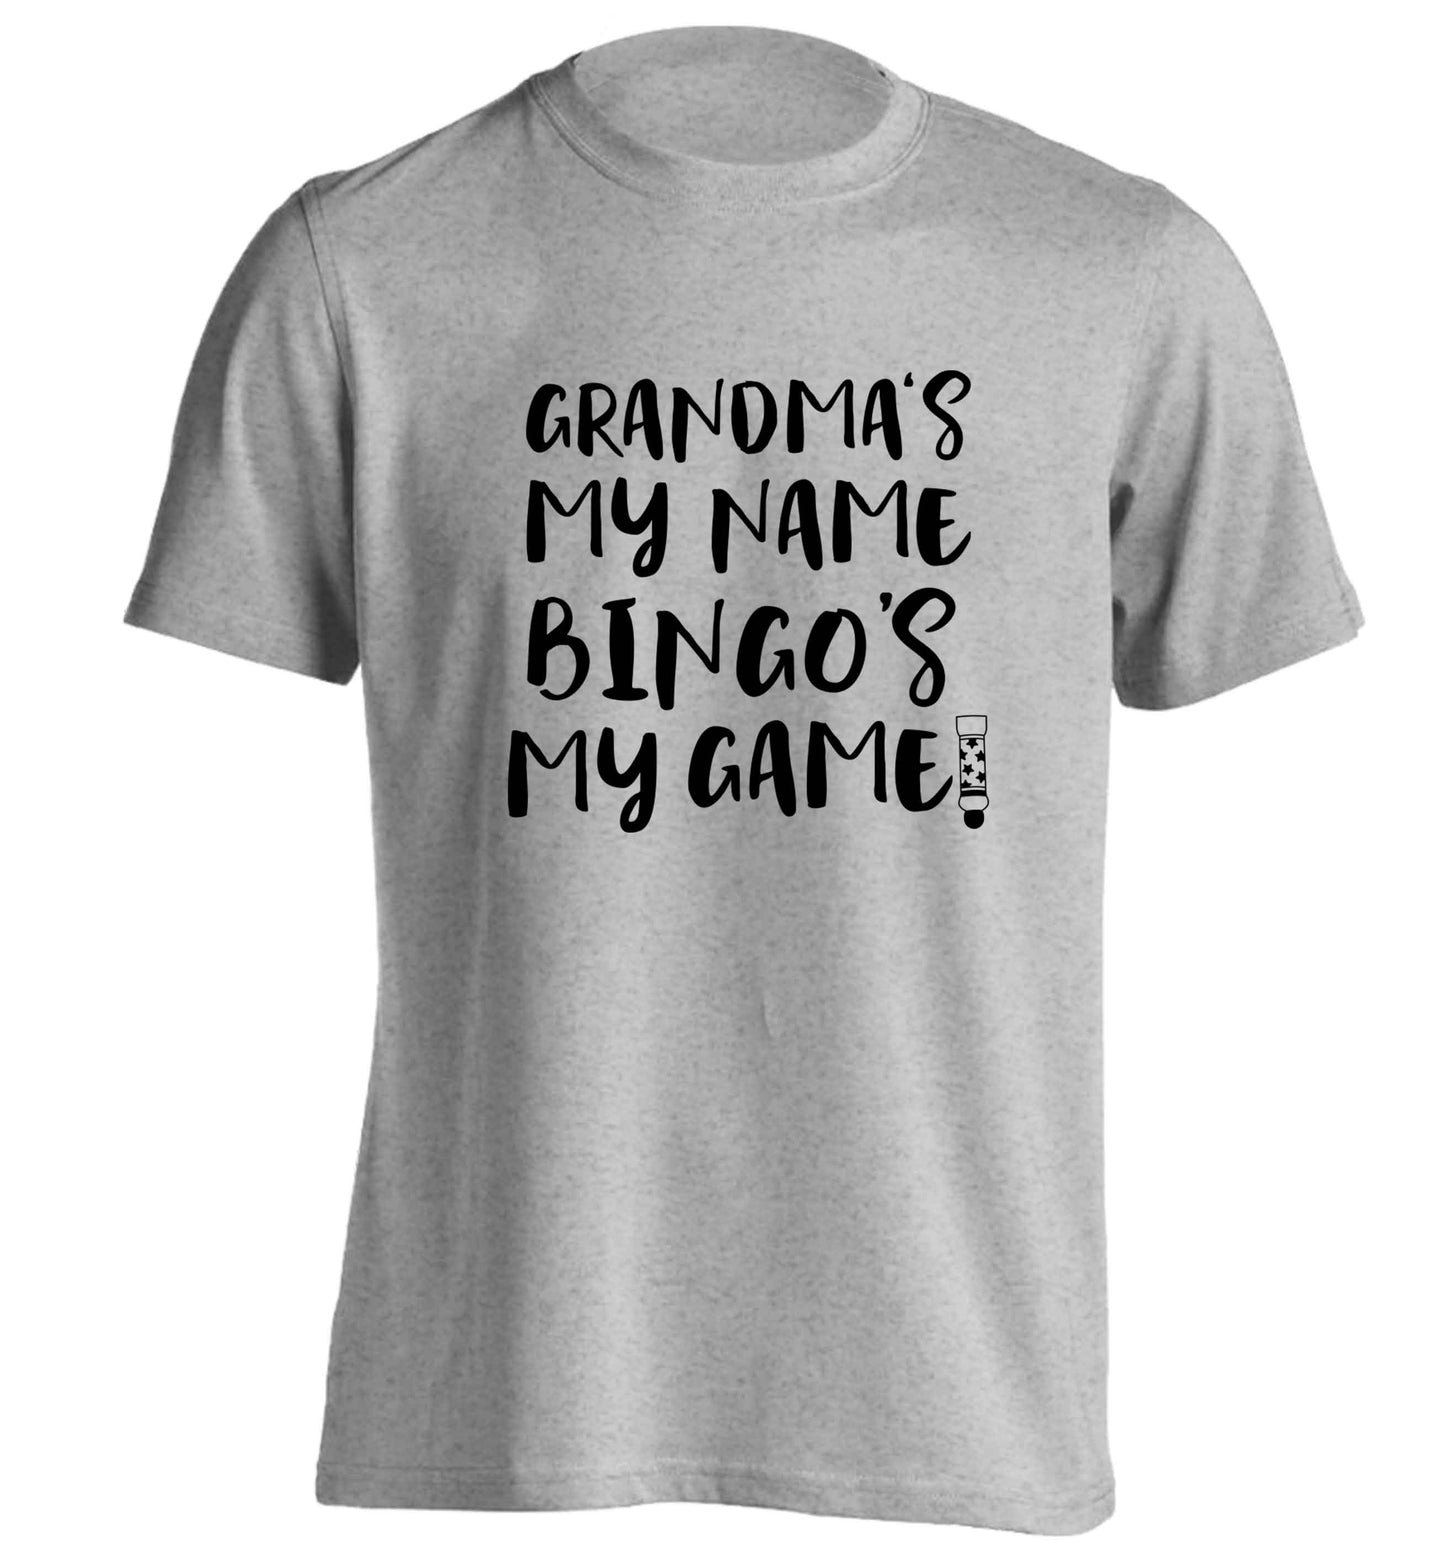 Grandma's my name bingo's my game! adults unisex grey Tshirt 2XL